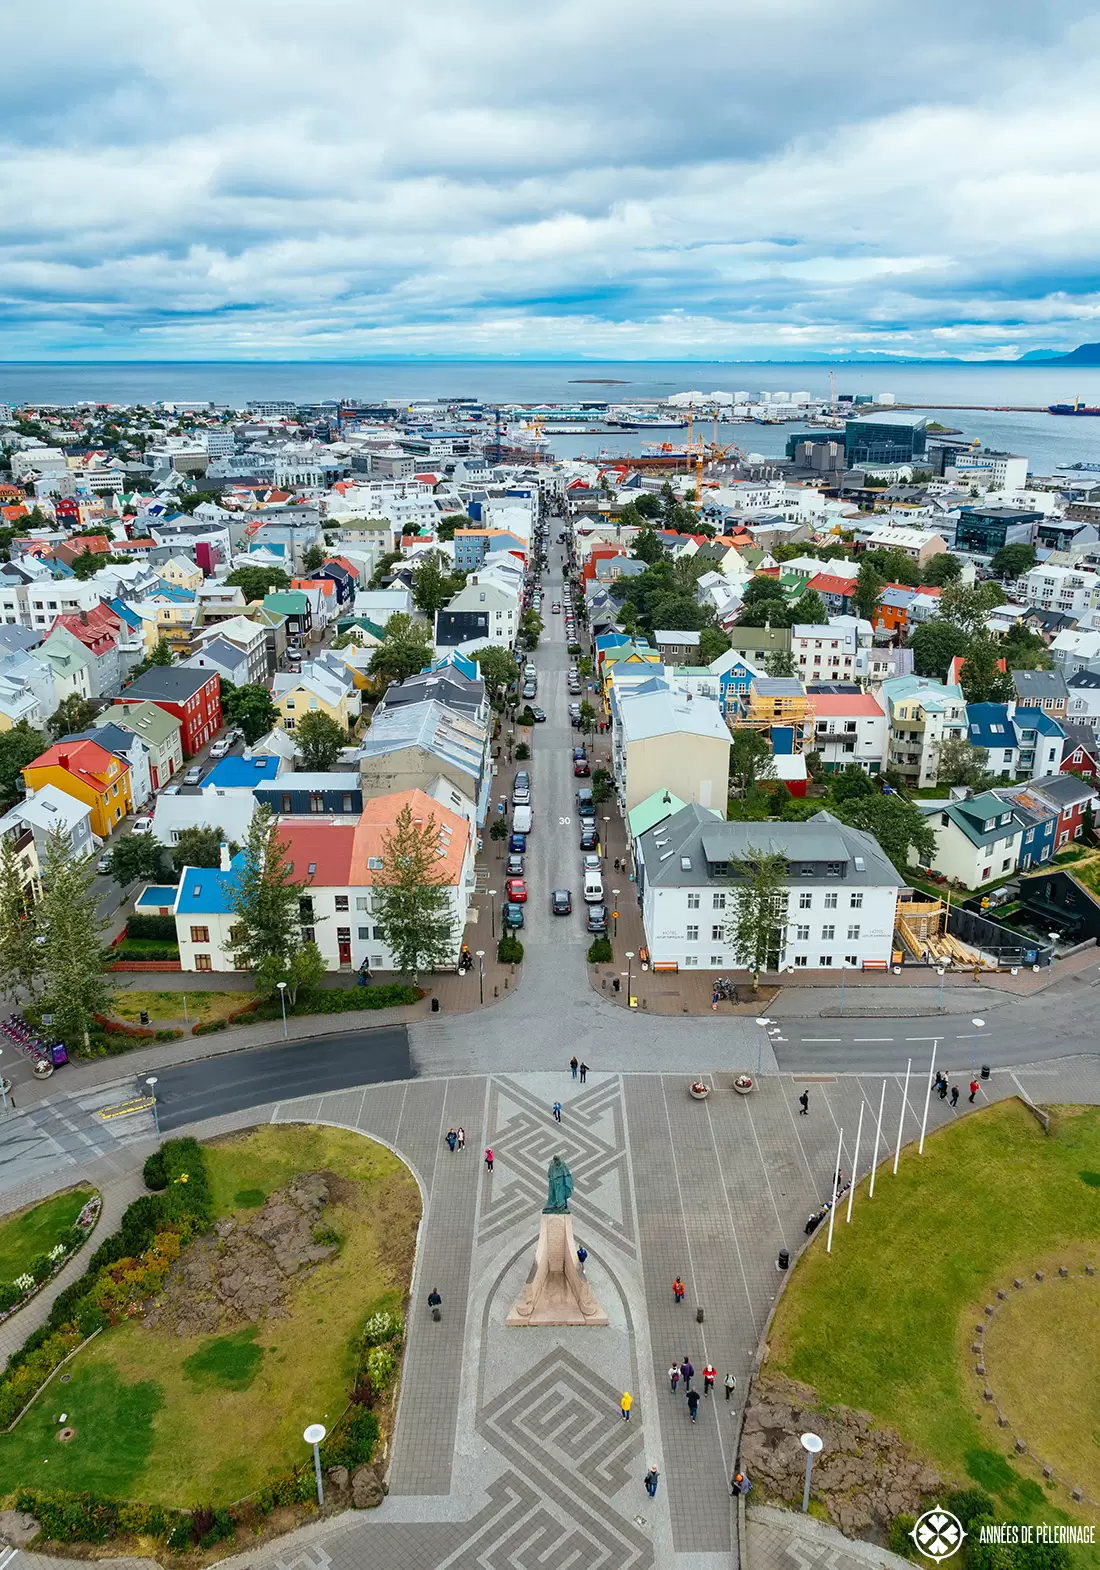 travel guide for reykjavik